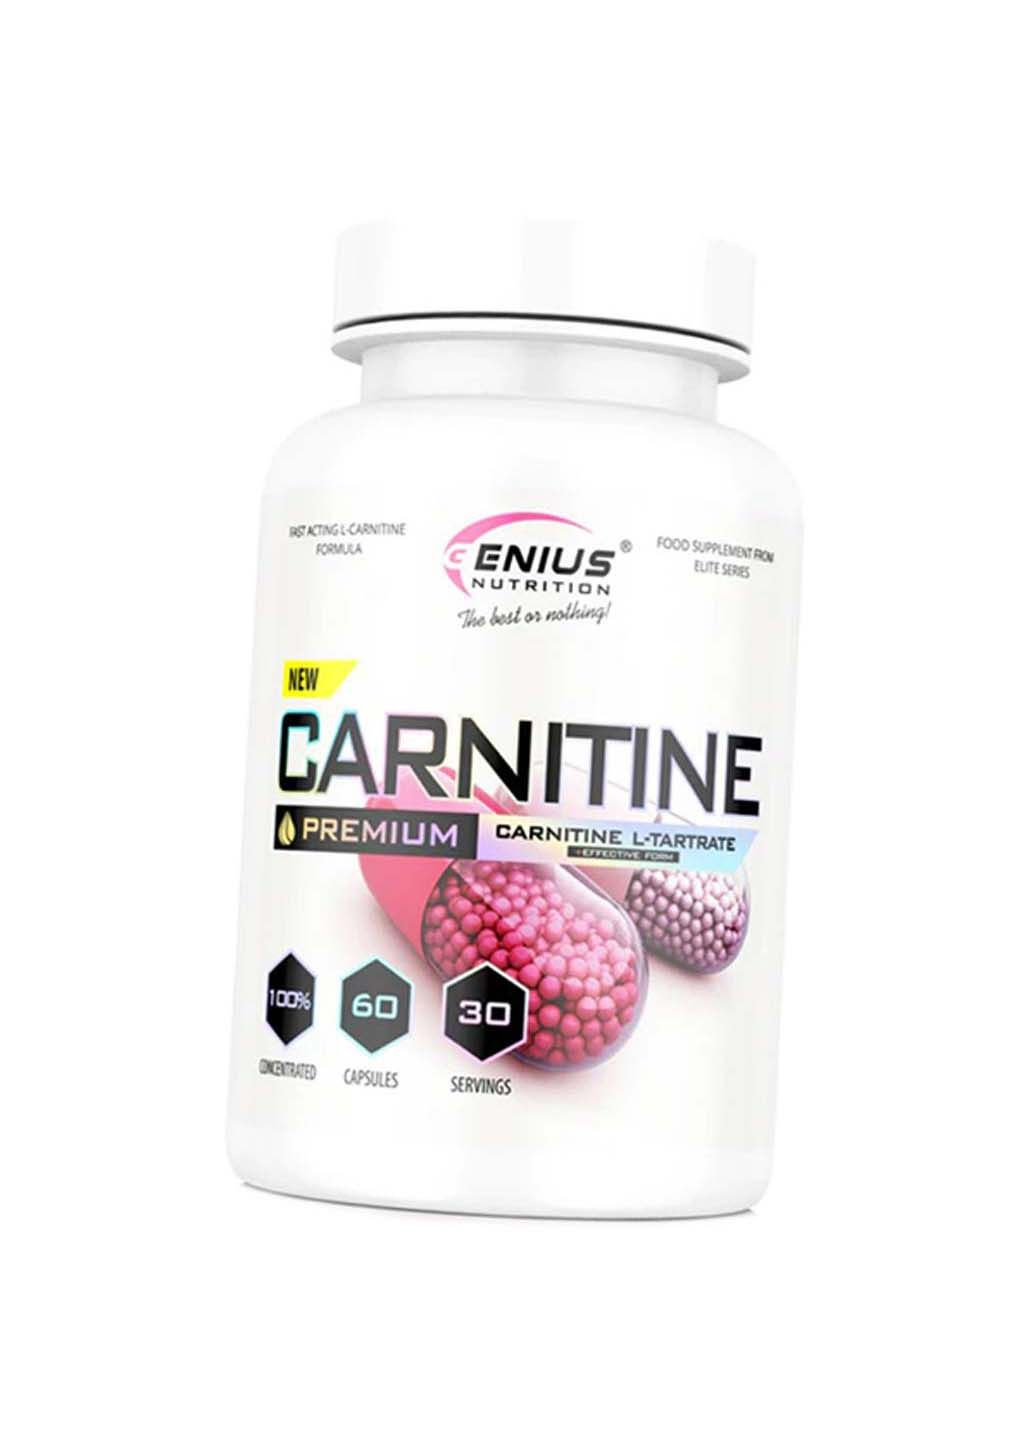 Л Карнитин Тартрат в капсулах Carnitine L-Tartrate 60капс Genius Nutrition (292710827)